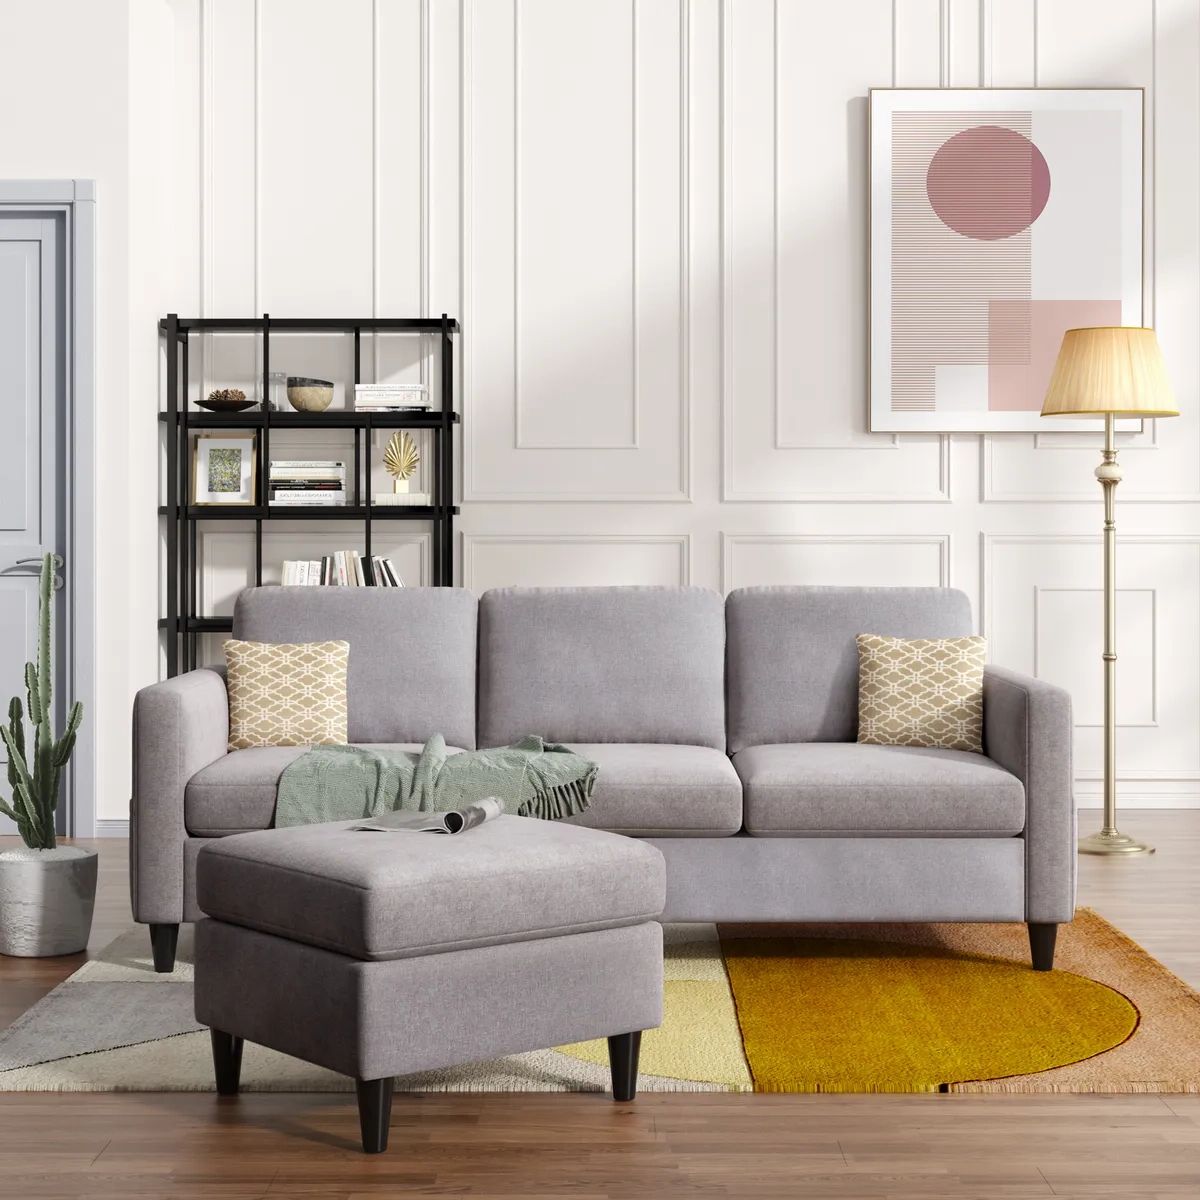 Habitrio Reversible Sectional Sofa L Shape 3 Seater Couch Sofa Movable  Ottoman 195358179284 | Ebay Regarding Sectional Sofas With Movable Ottoman (Gallery 13 of 20)